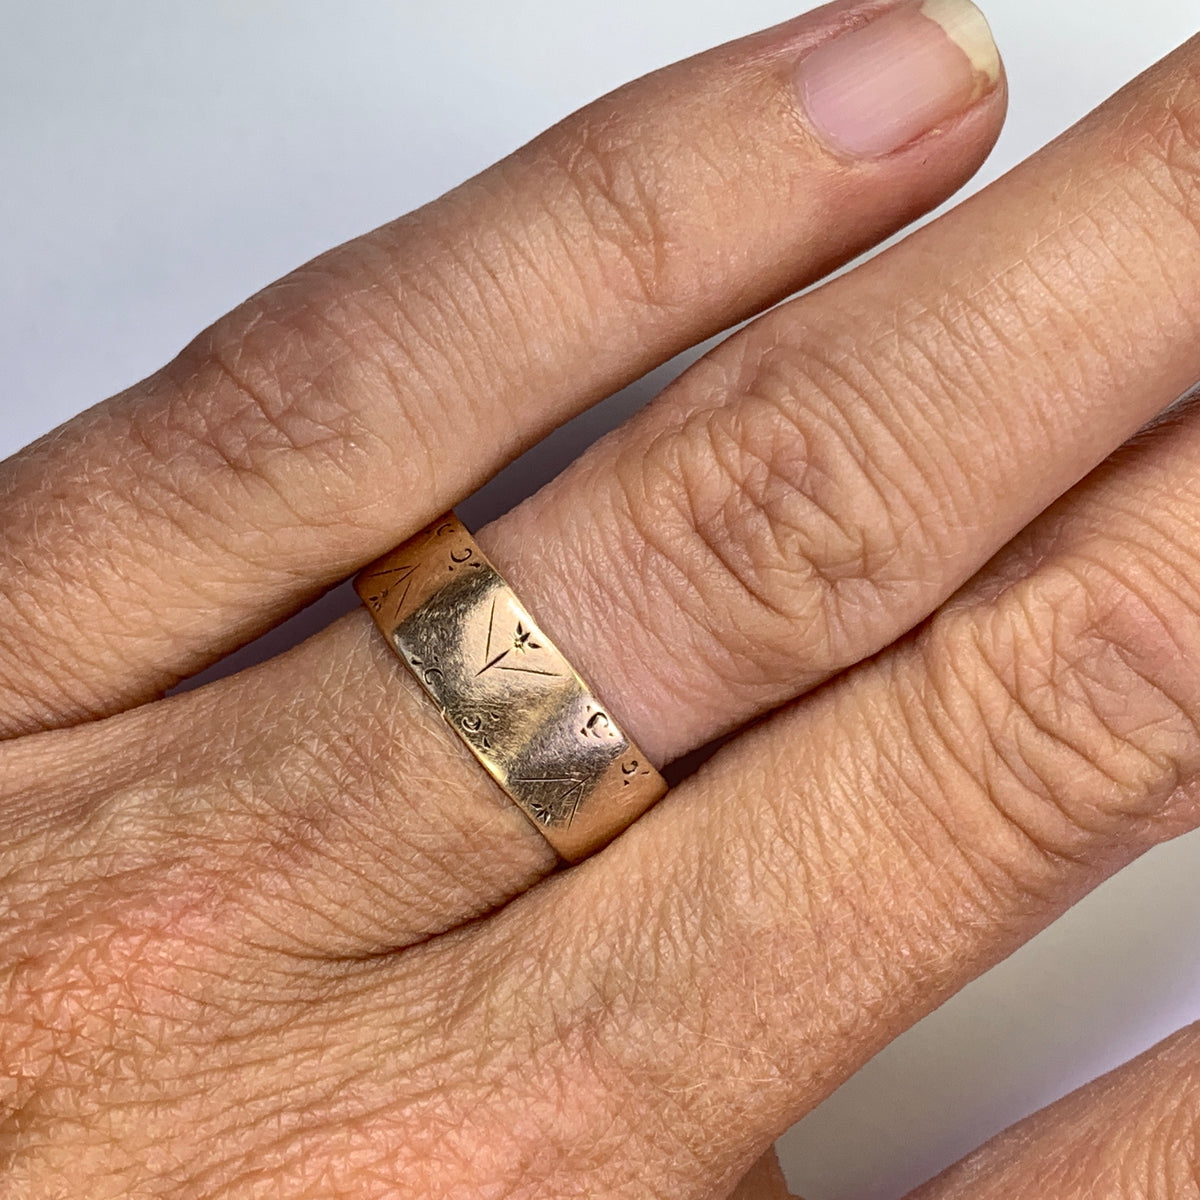 Louis Vuitton Nanogram Ring Review